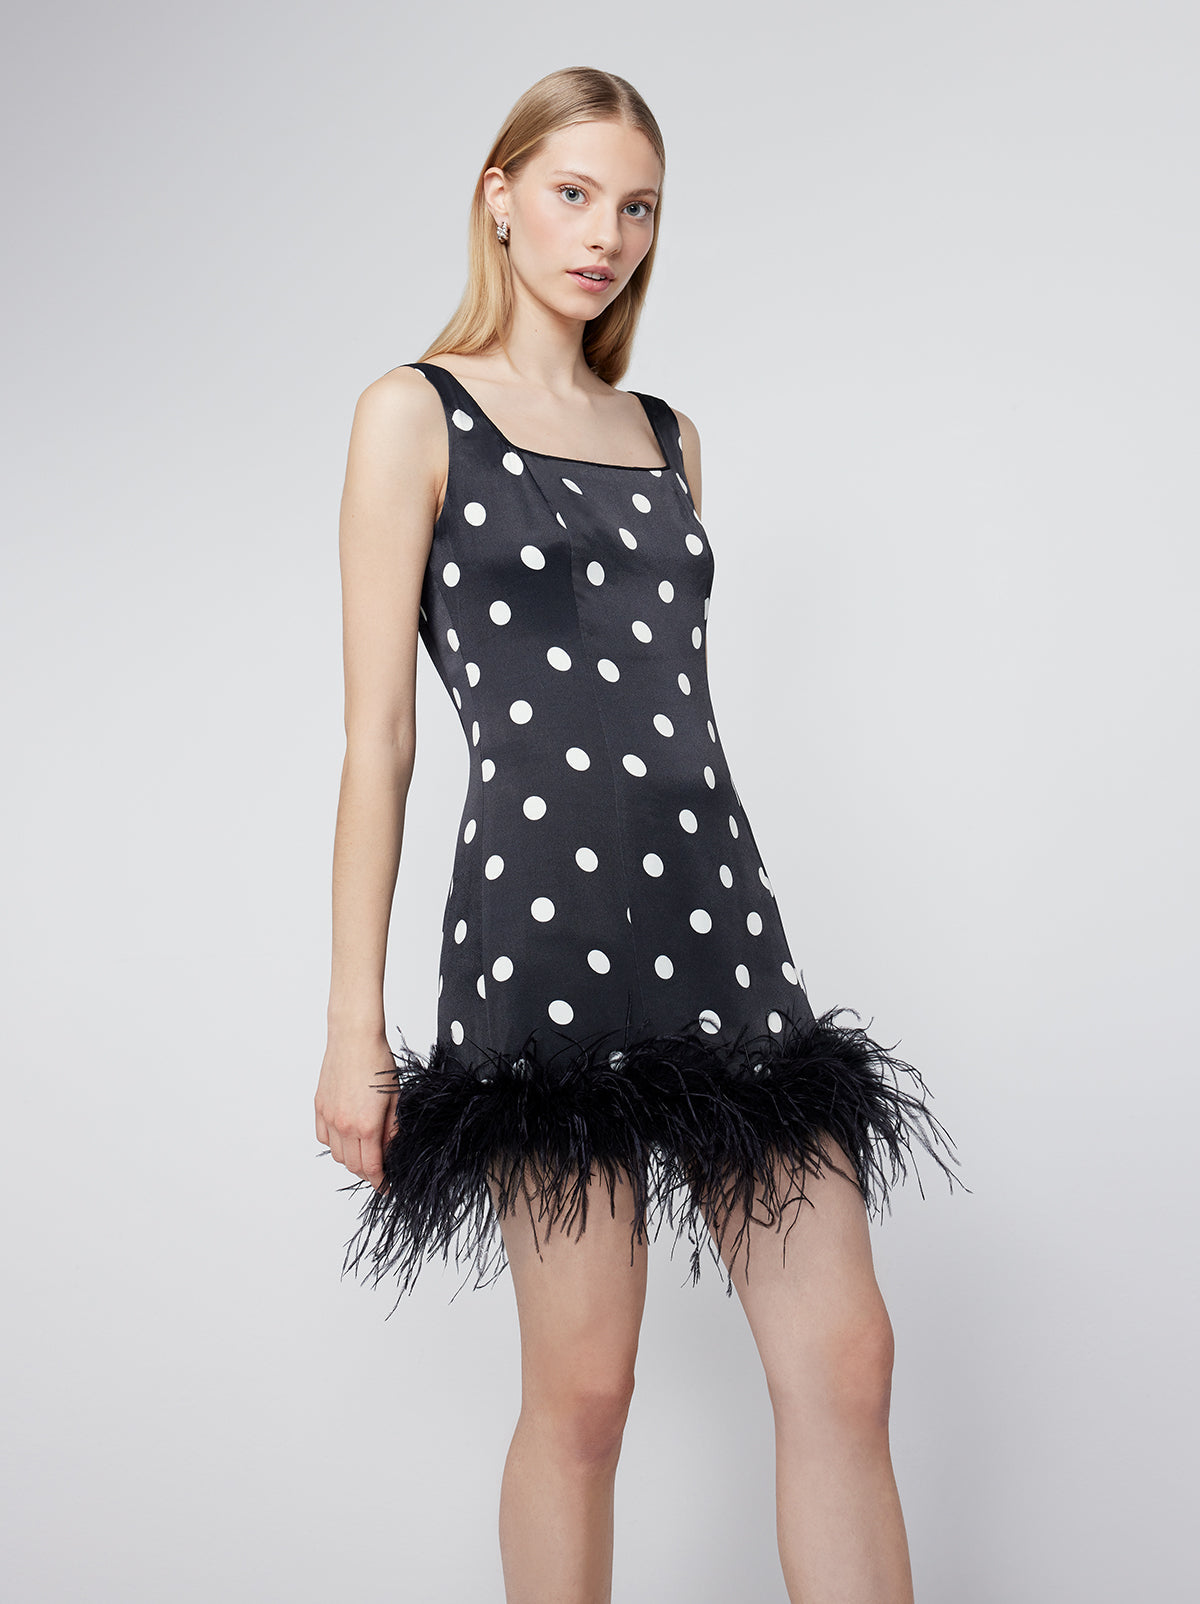 Edina Black Polka Dot Mini Dress